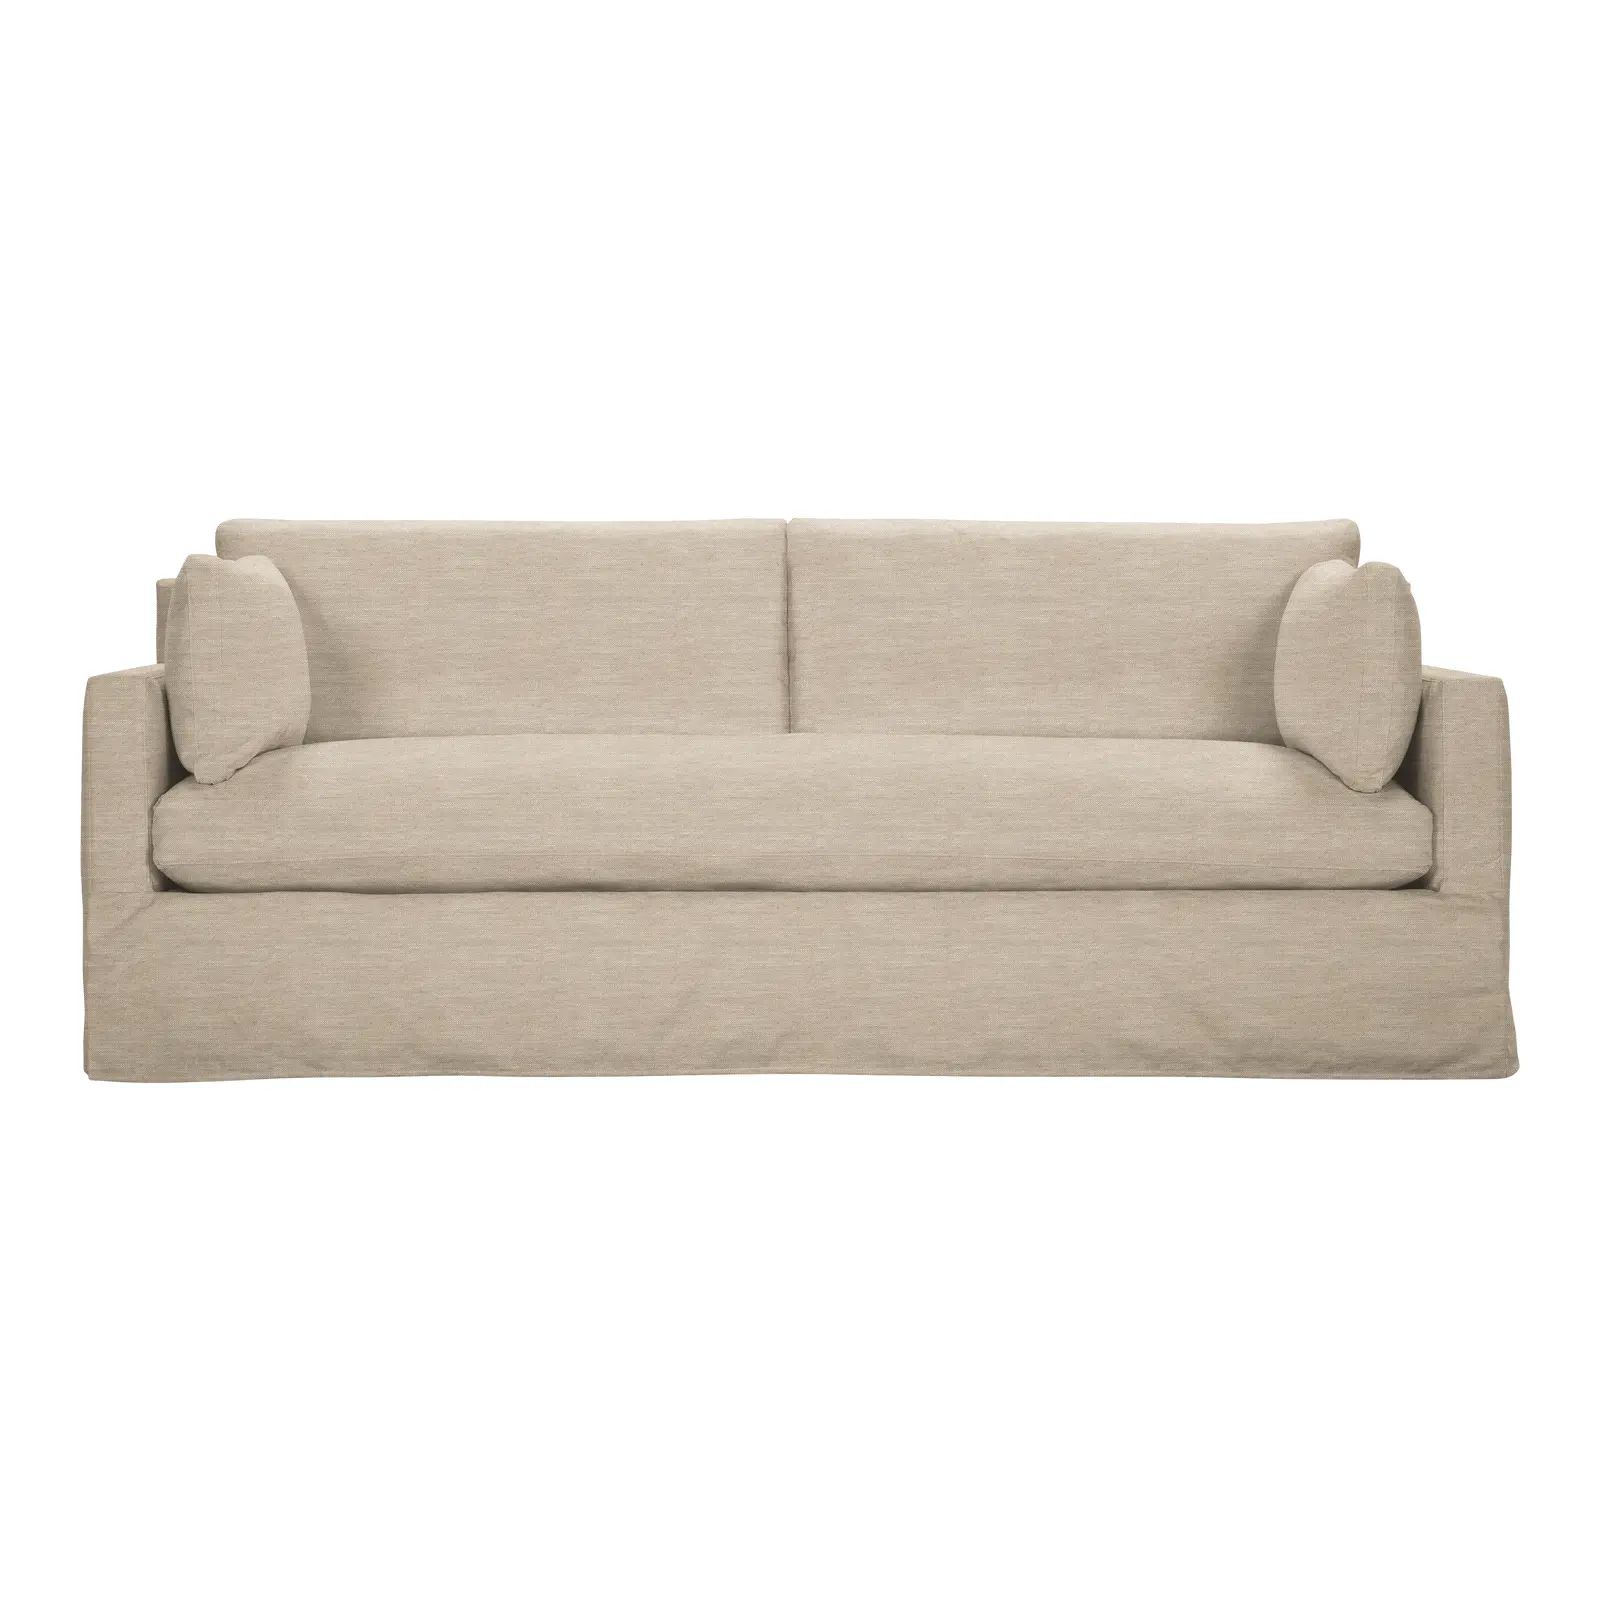 Serena Slipcover Bench Cushion Sofa, Beige Linen | Chairish